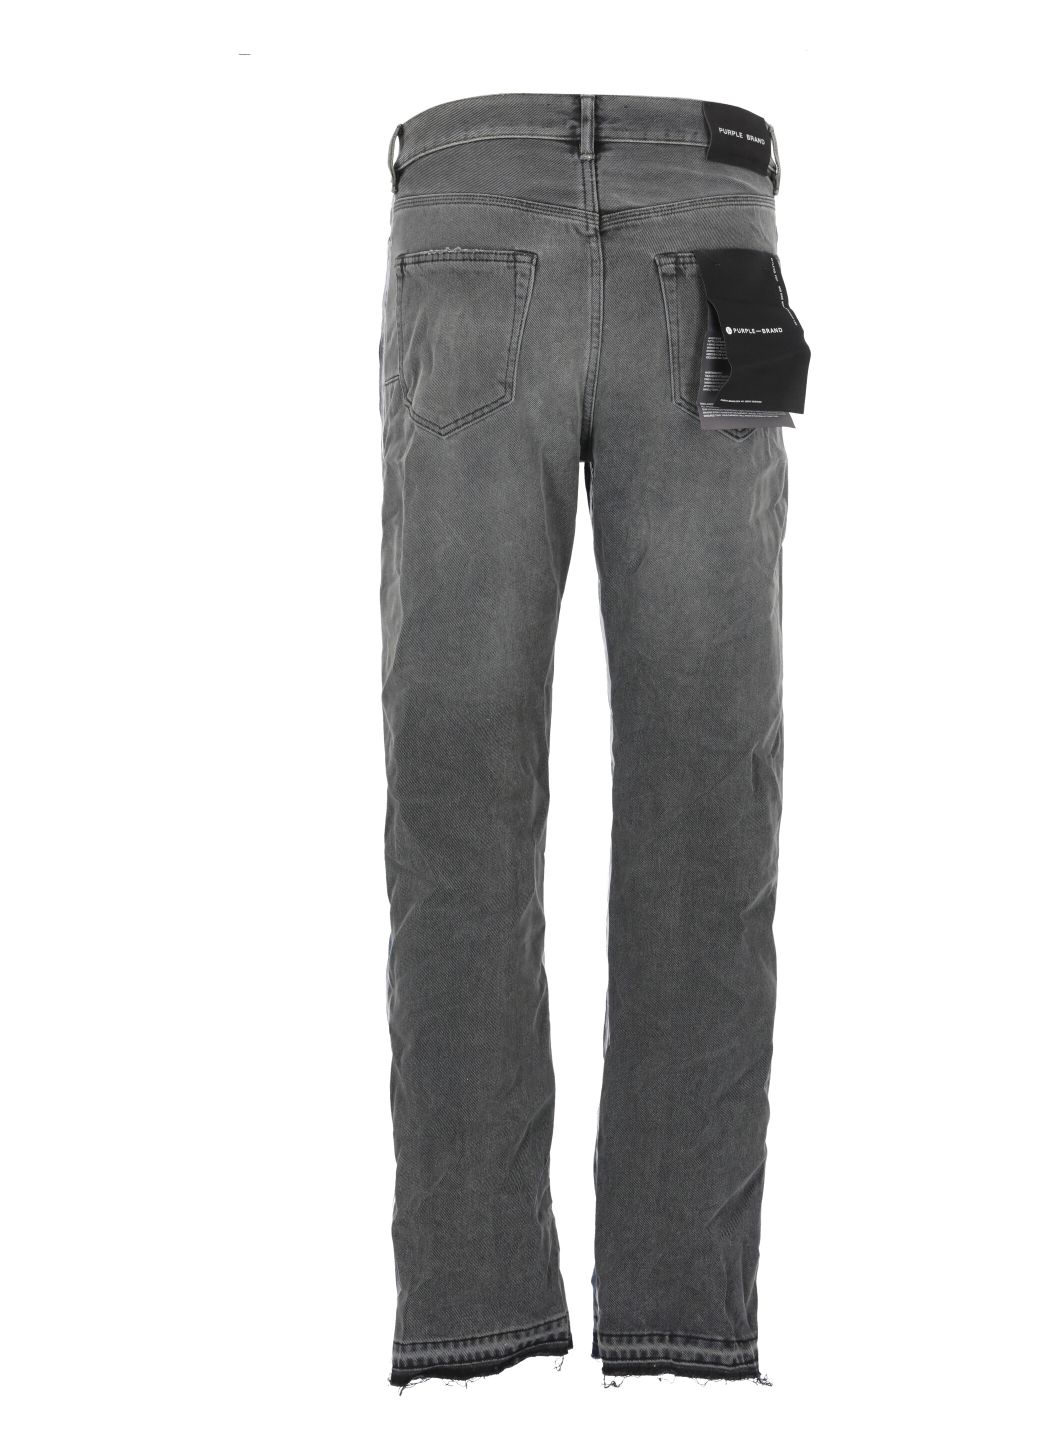 P011 jeans